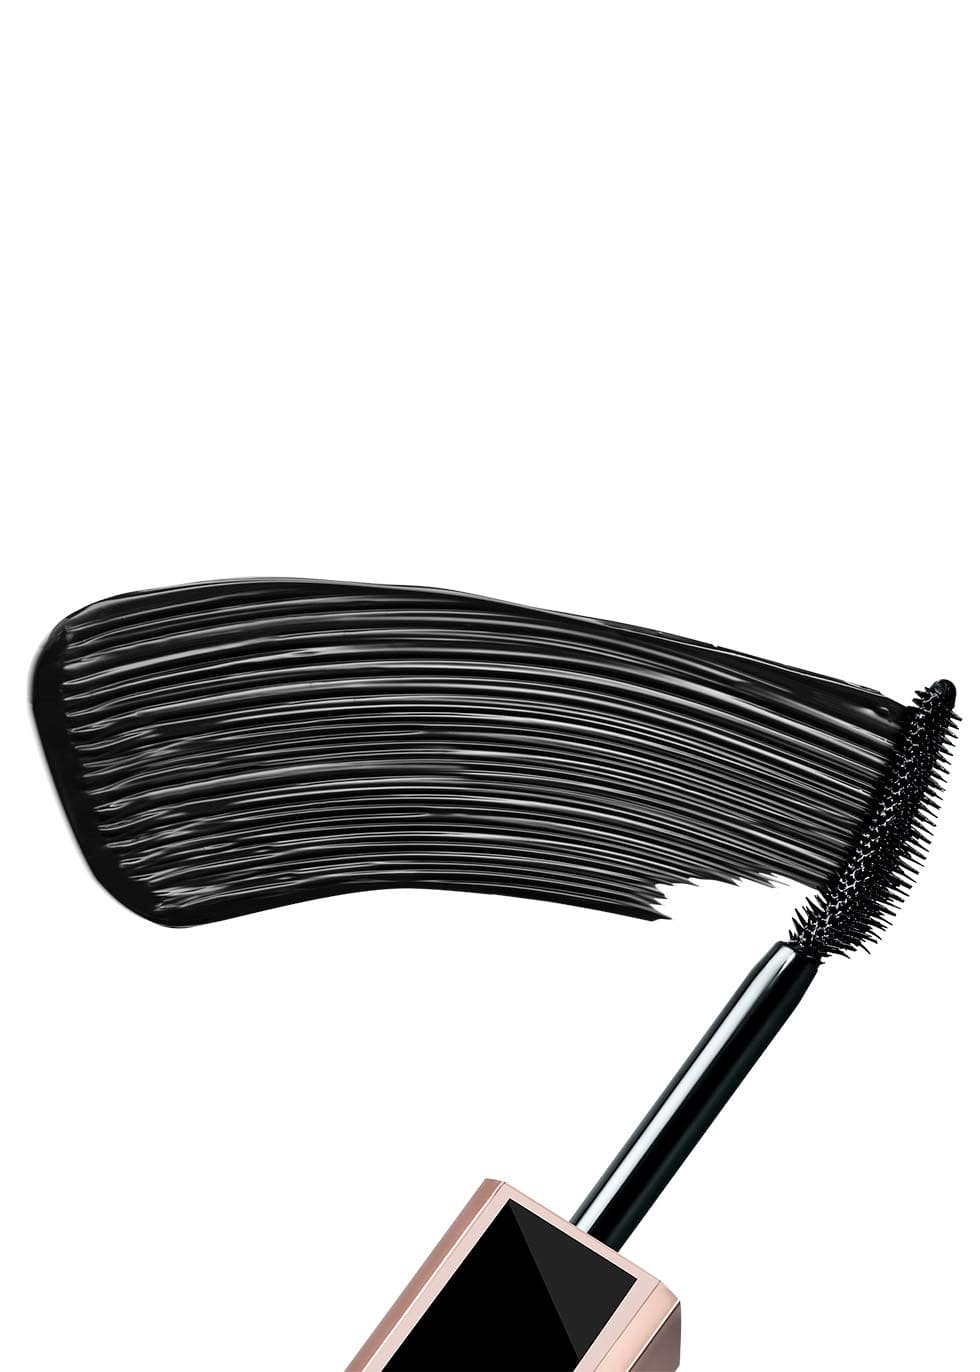 Lancôme Lash Idole Mascara Waterproof in Glossy Black